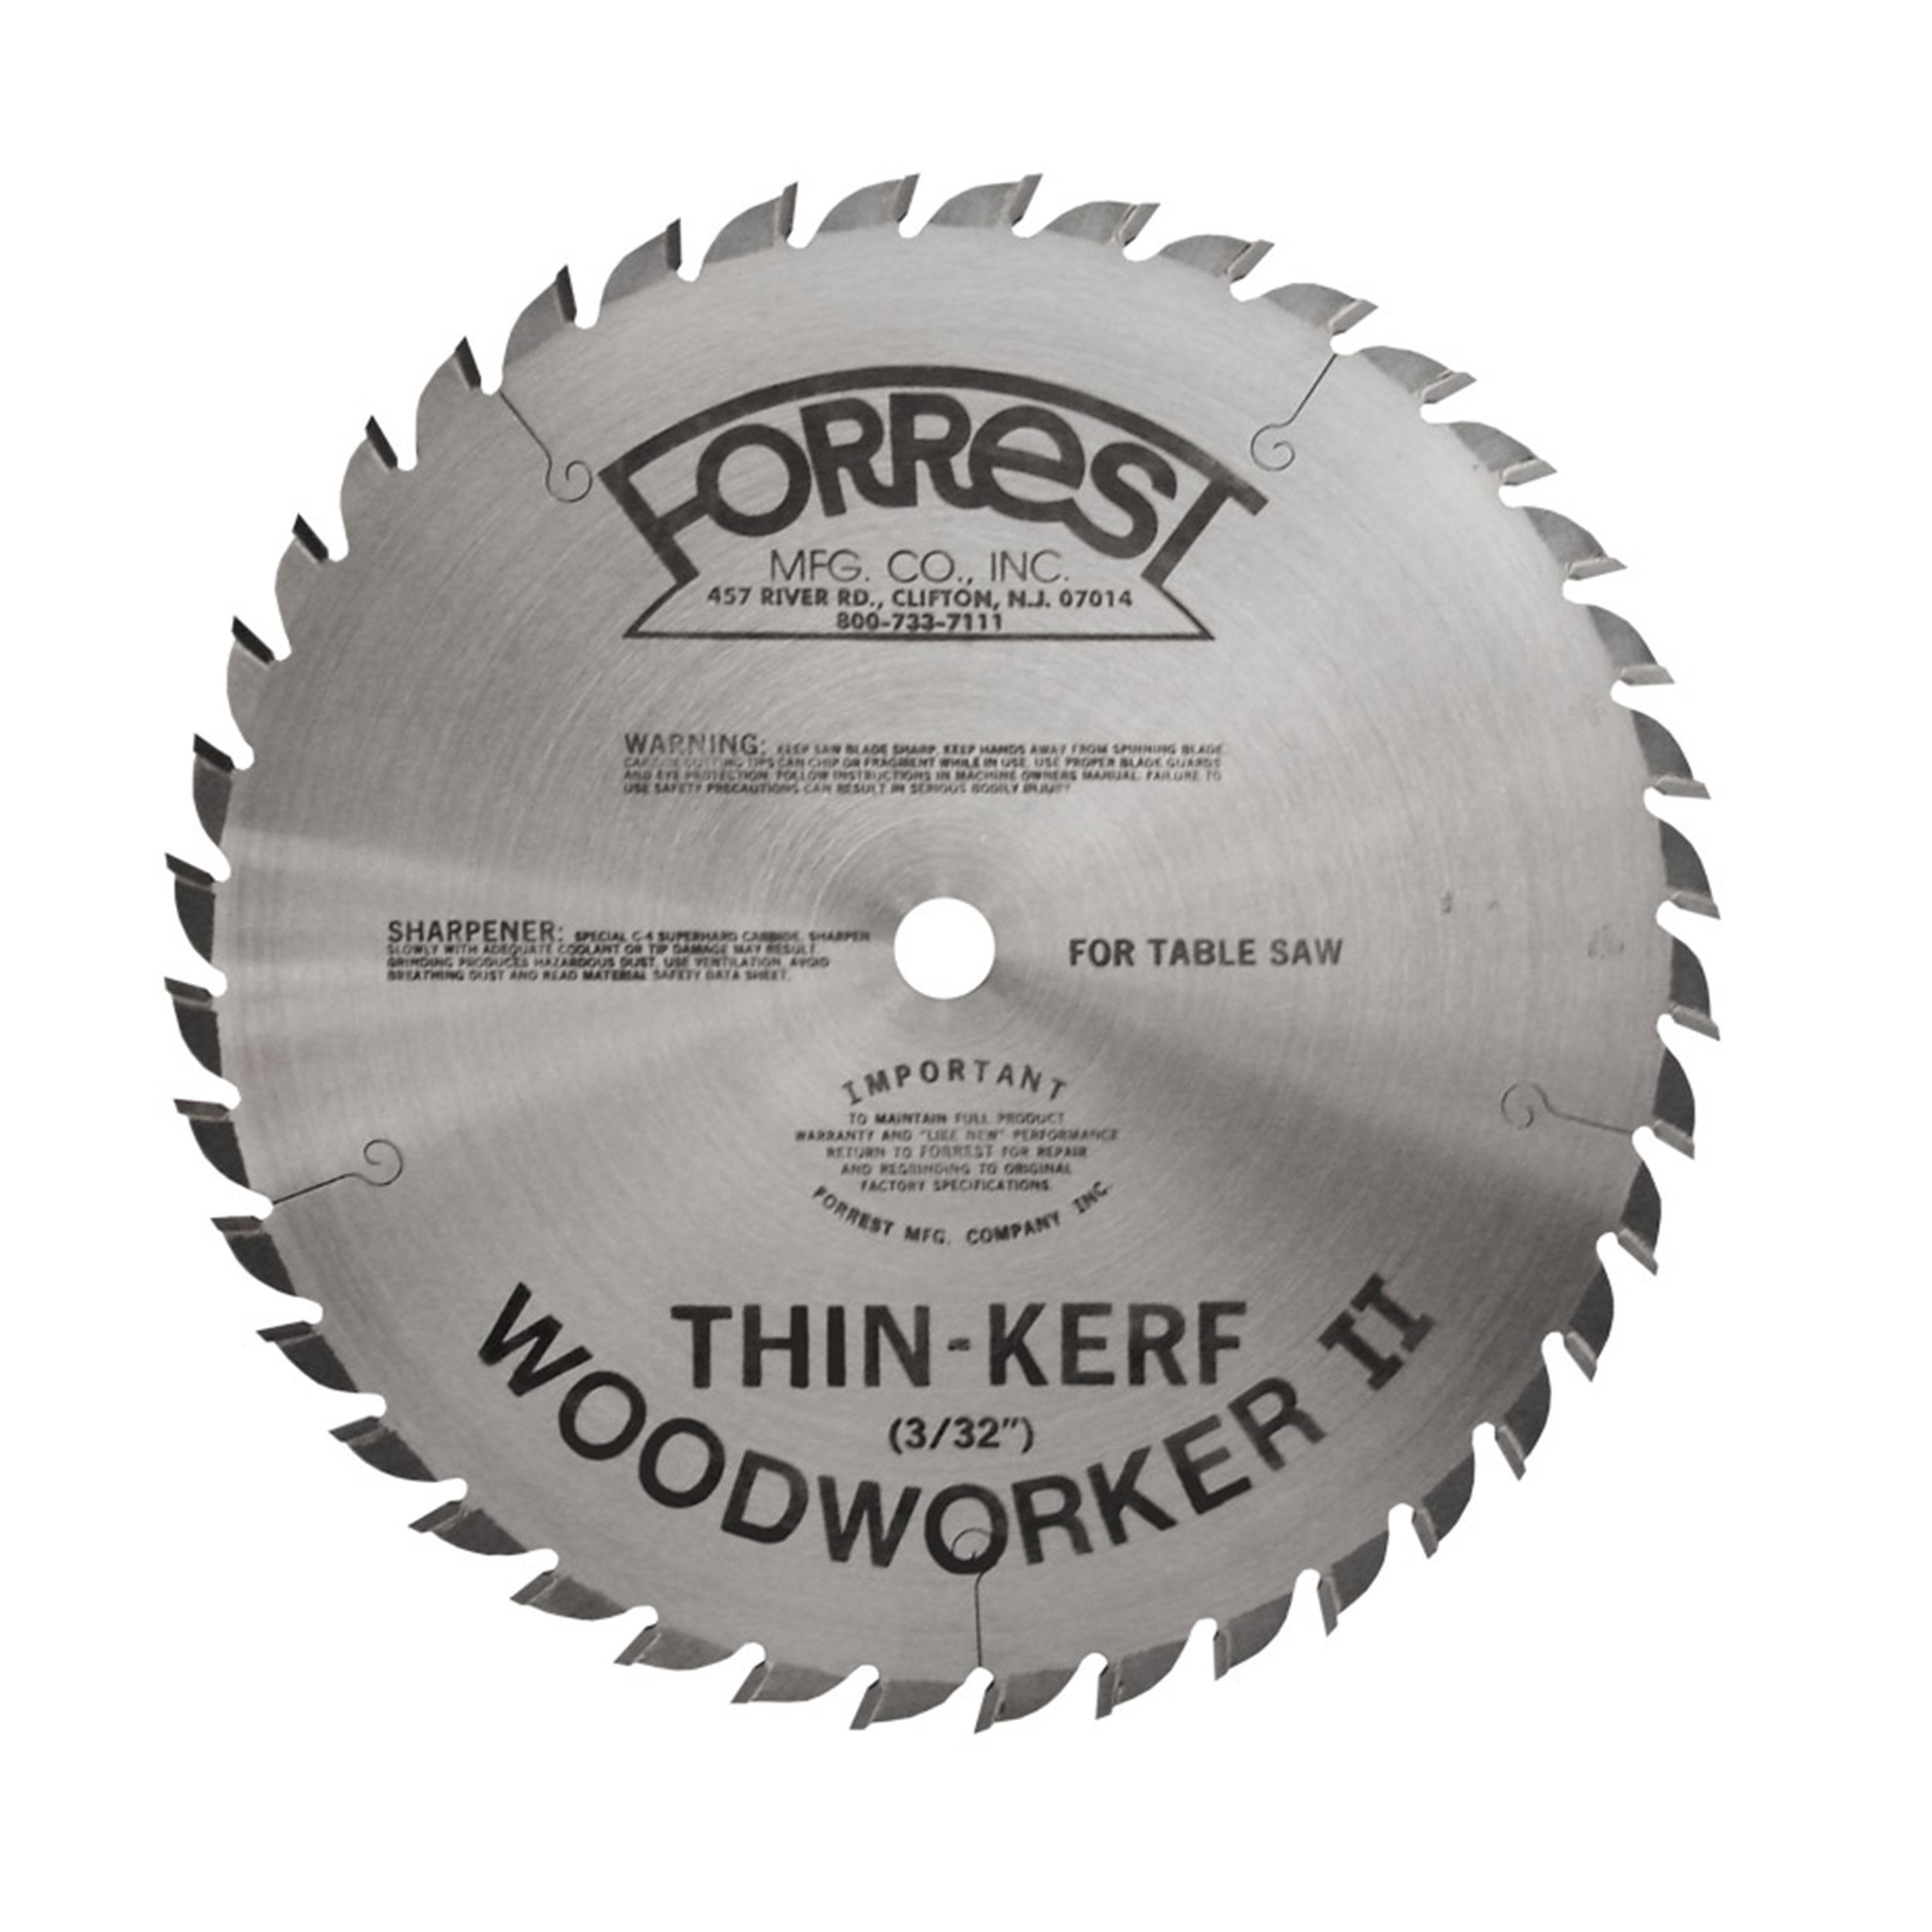 Ww08407100 Woodworker Ii Saw Blade, 8" X 40t, .100 Kerf X 5/8" Bore, Atb